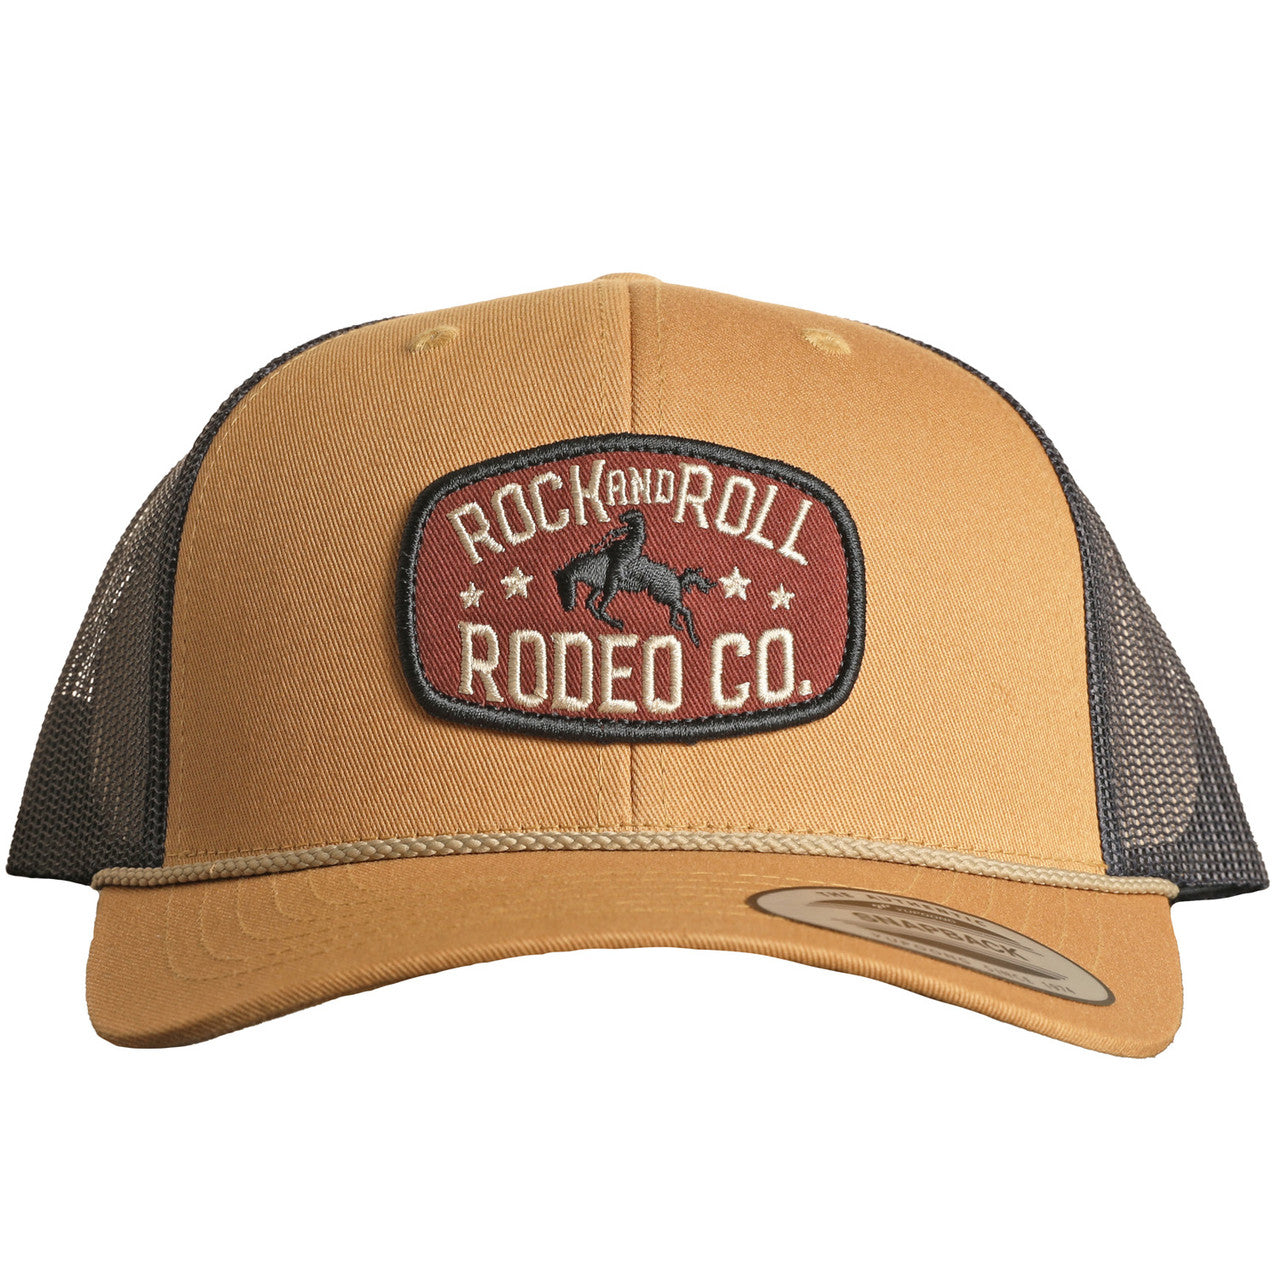 Rock and Roll Rodeo Co. Mustard Flat Trucker Cap